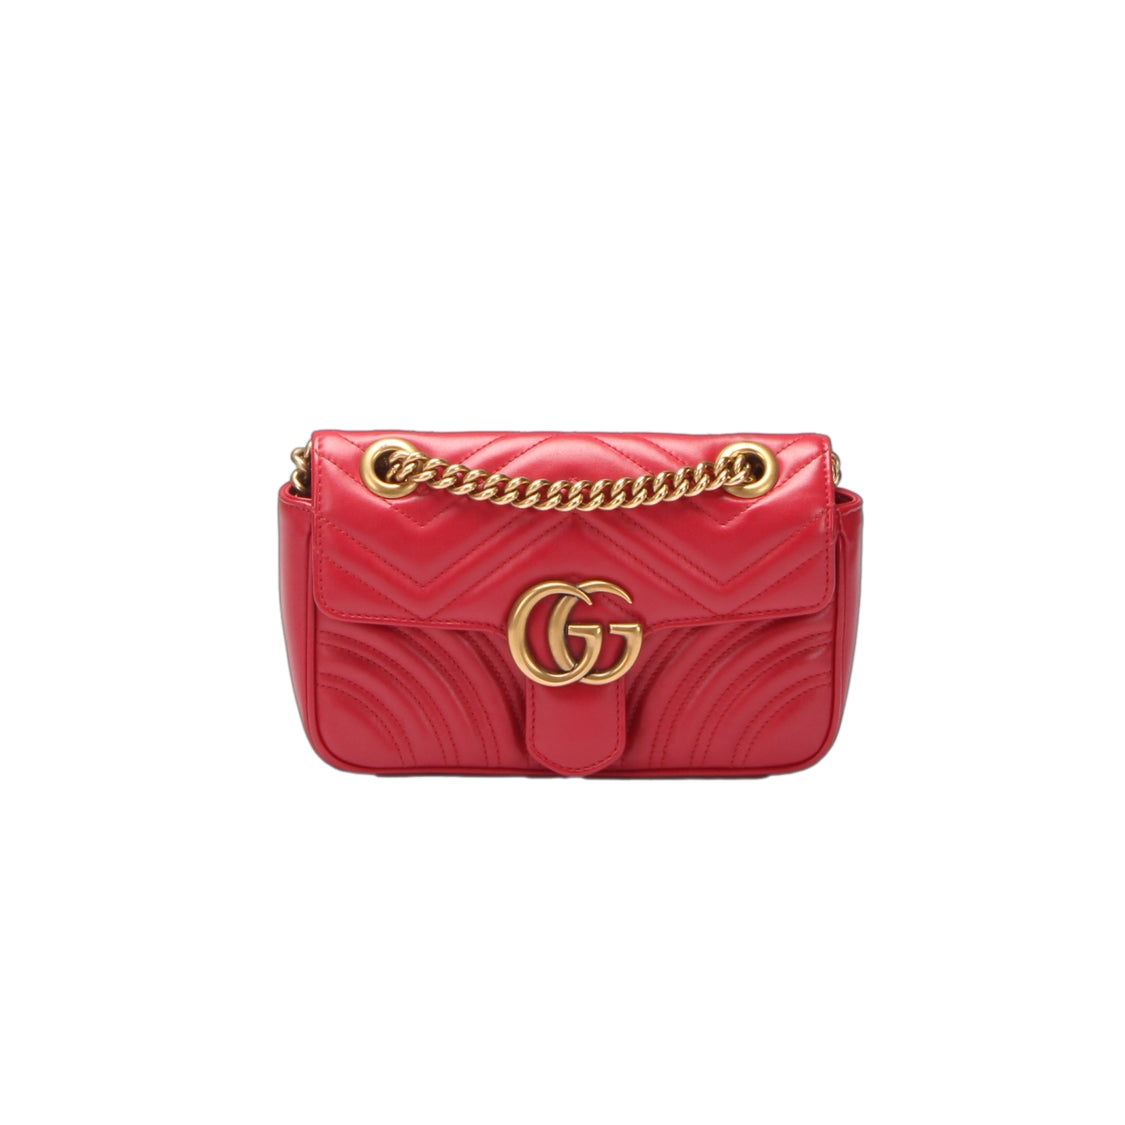 Mini GG Marmont Leather Shoulder Bag 446744